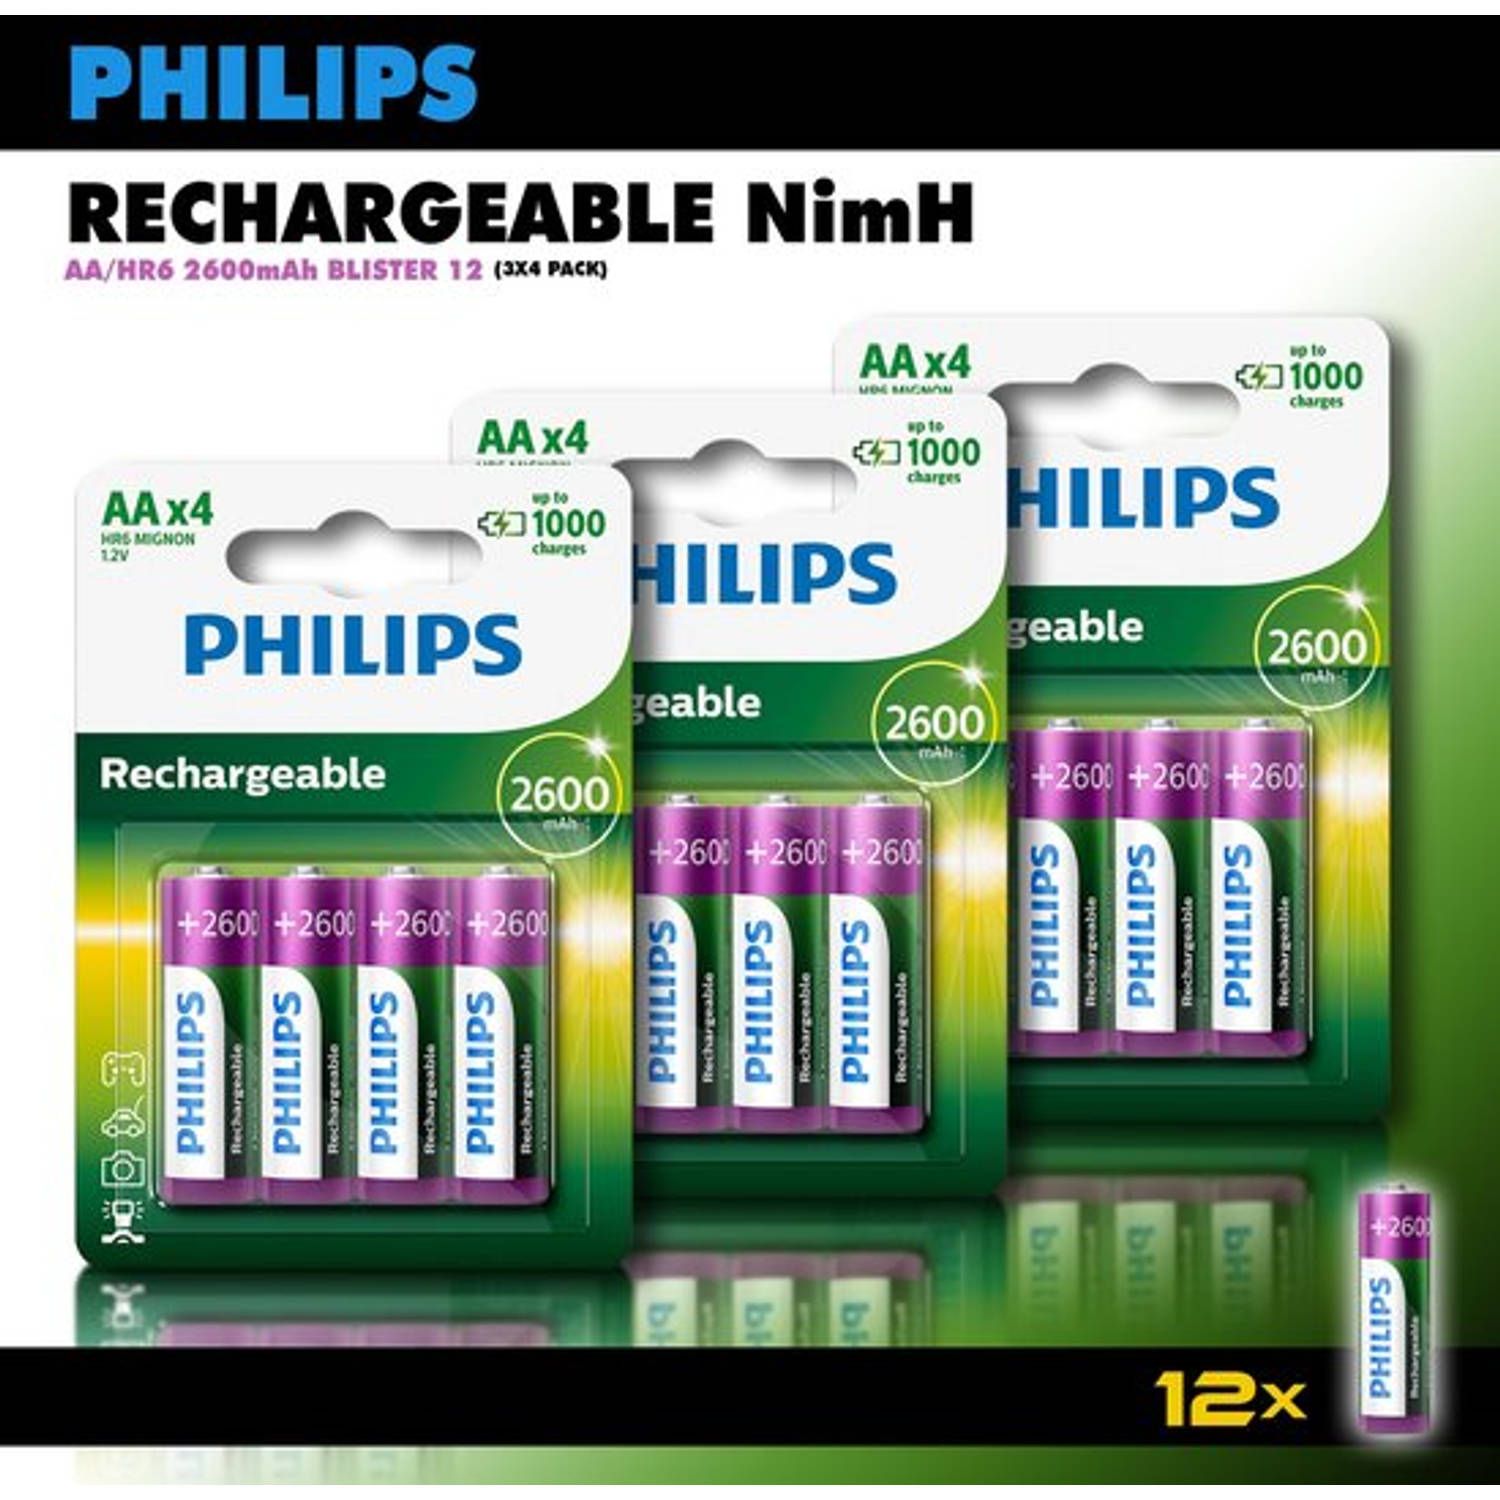 Philips AA oplaadbare batterijen - 2600 mAh - 12 stuks